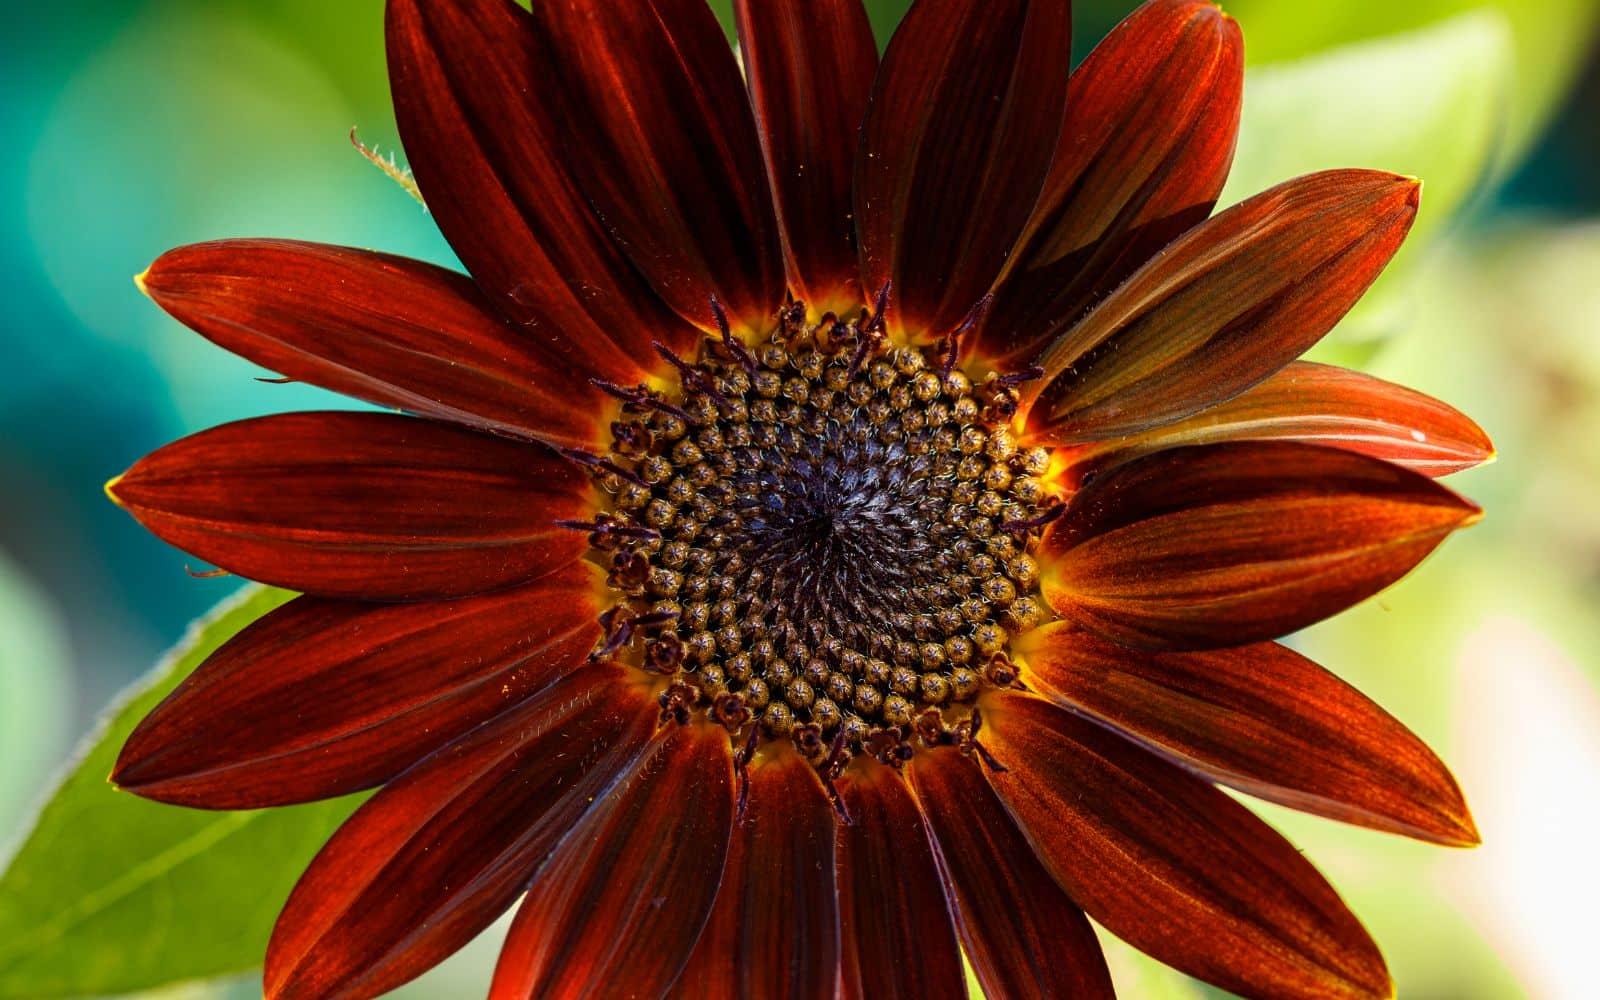 Red Sunflower